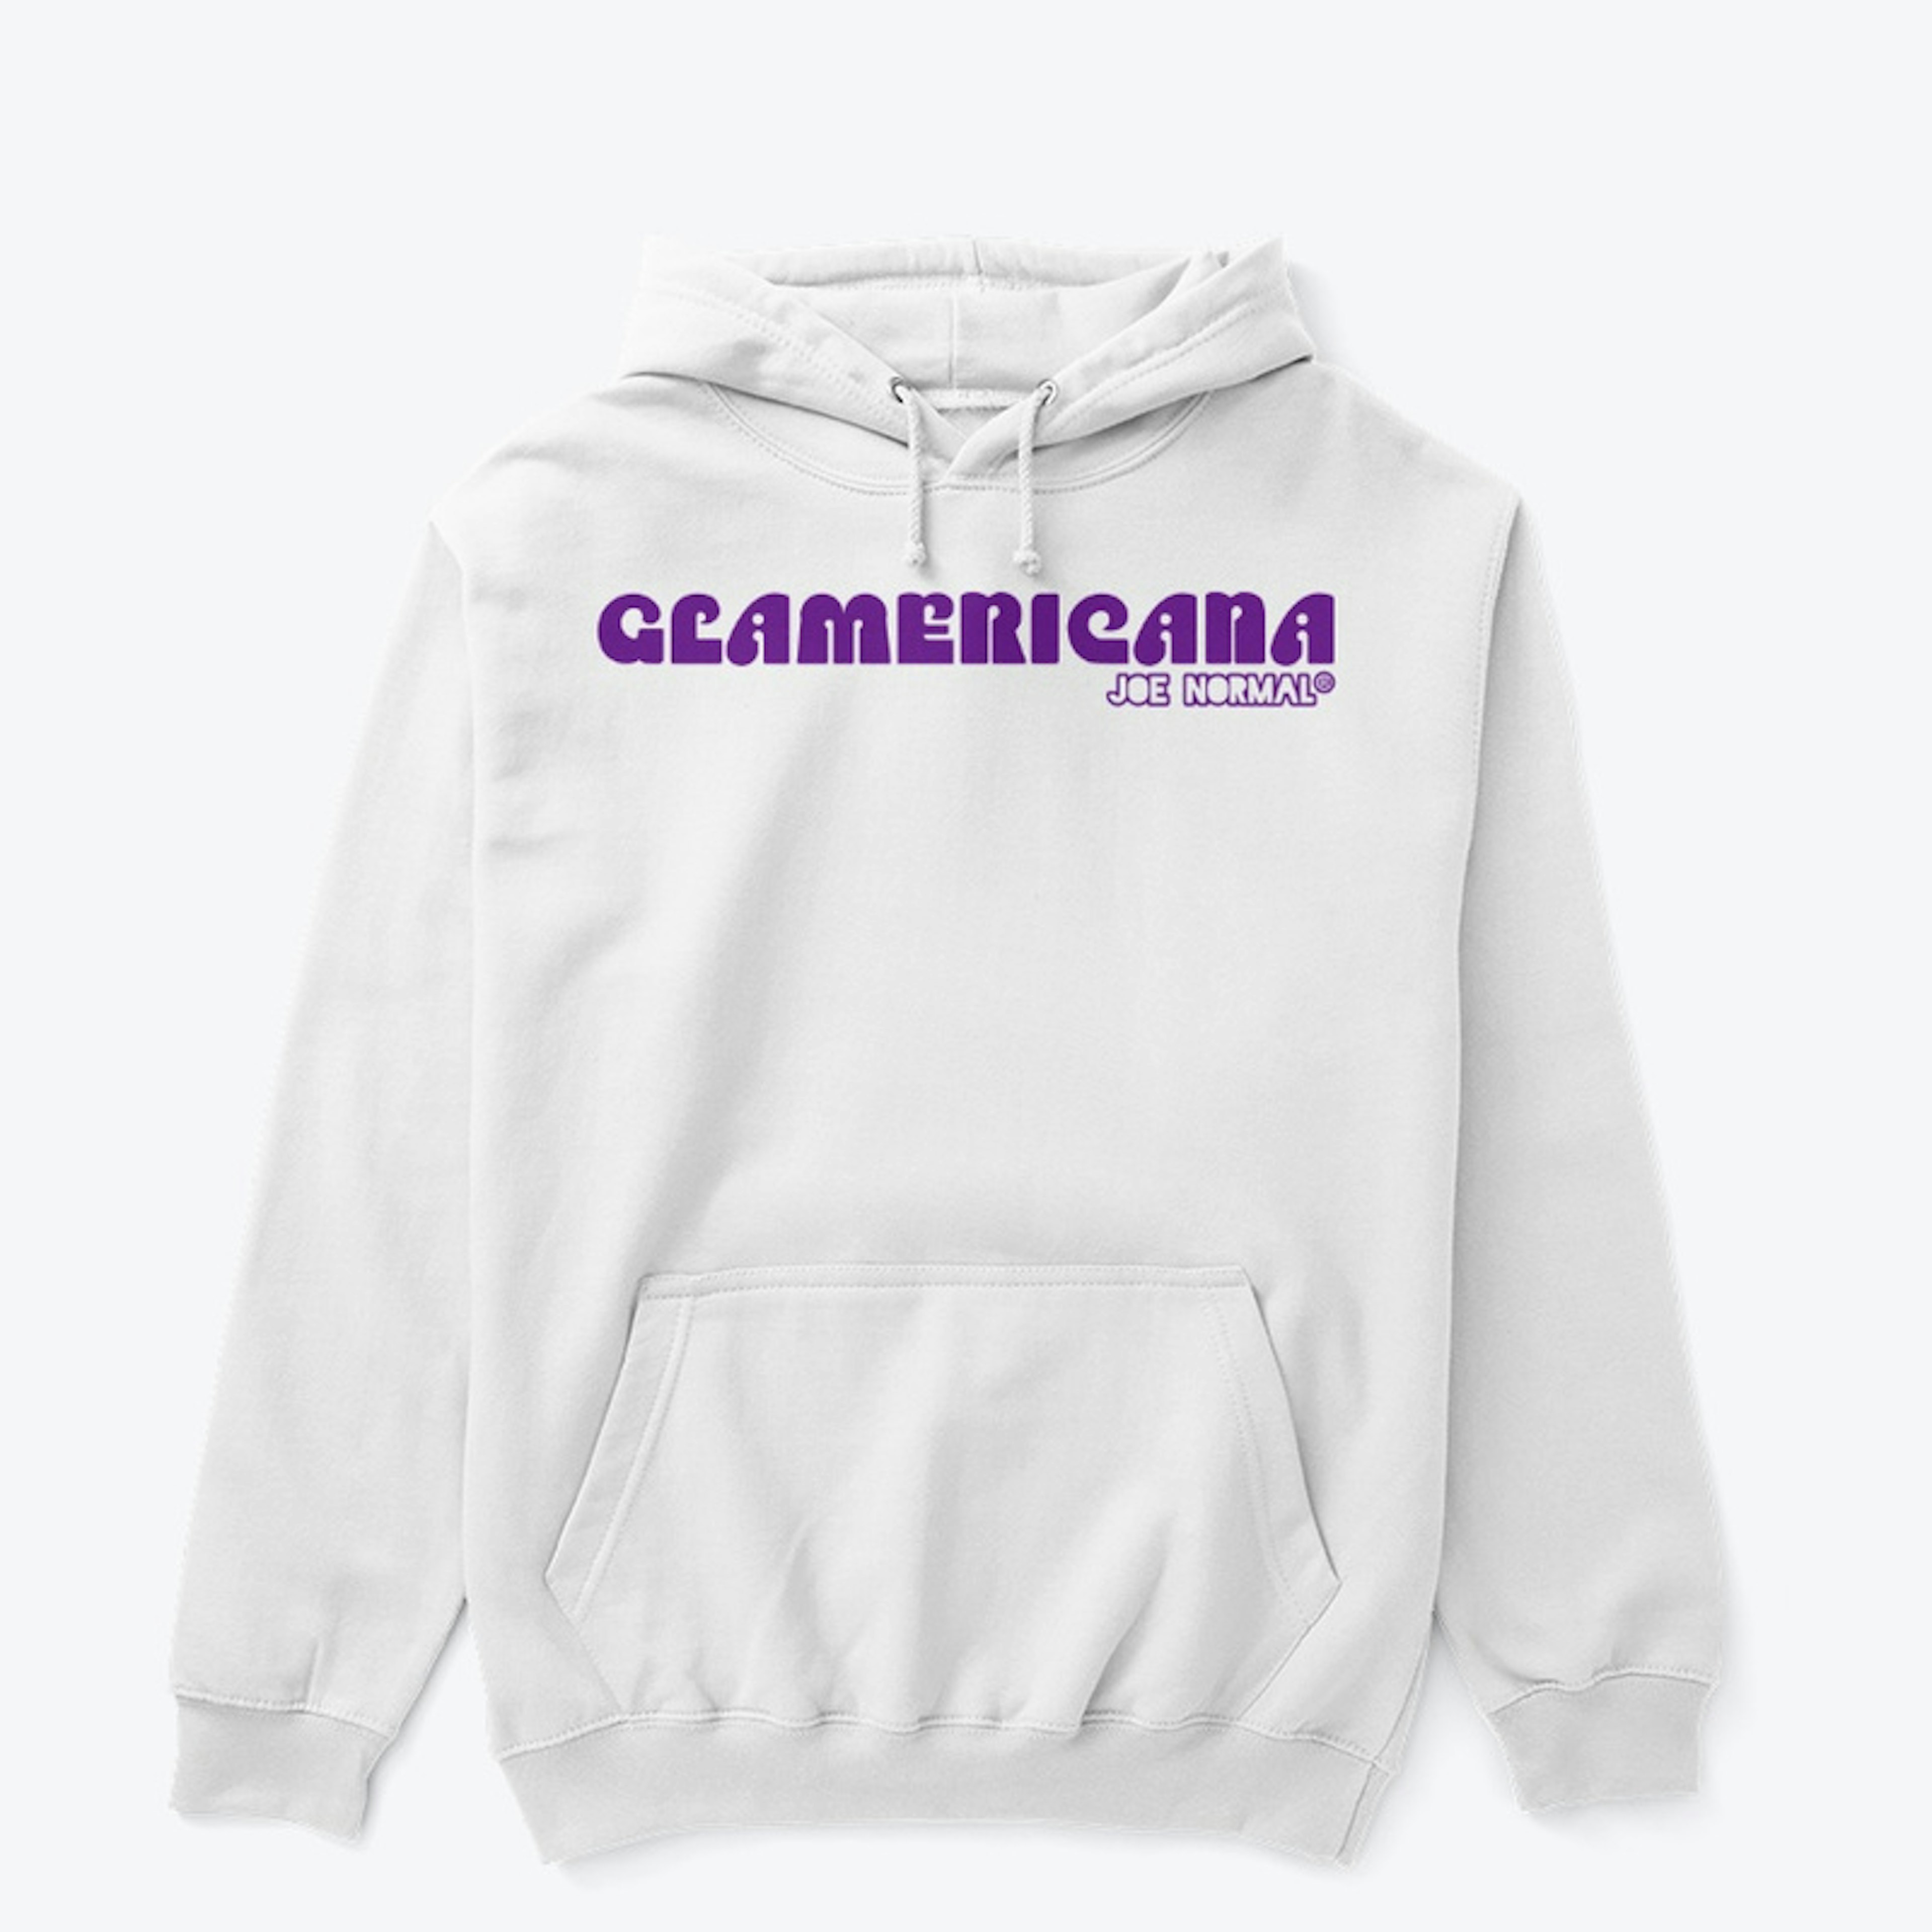 Glamericana purple slogan (Joe Normal)